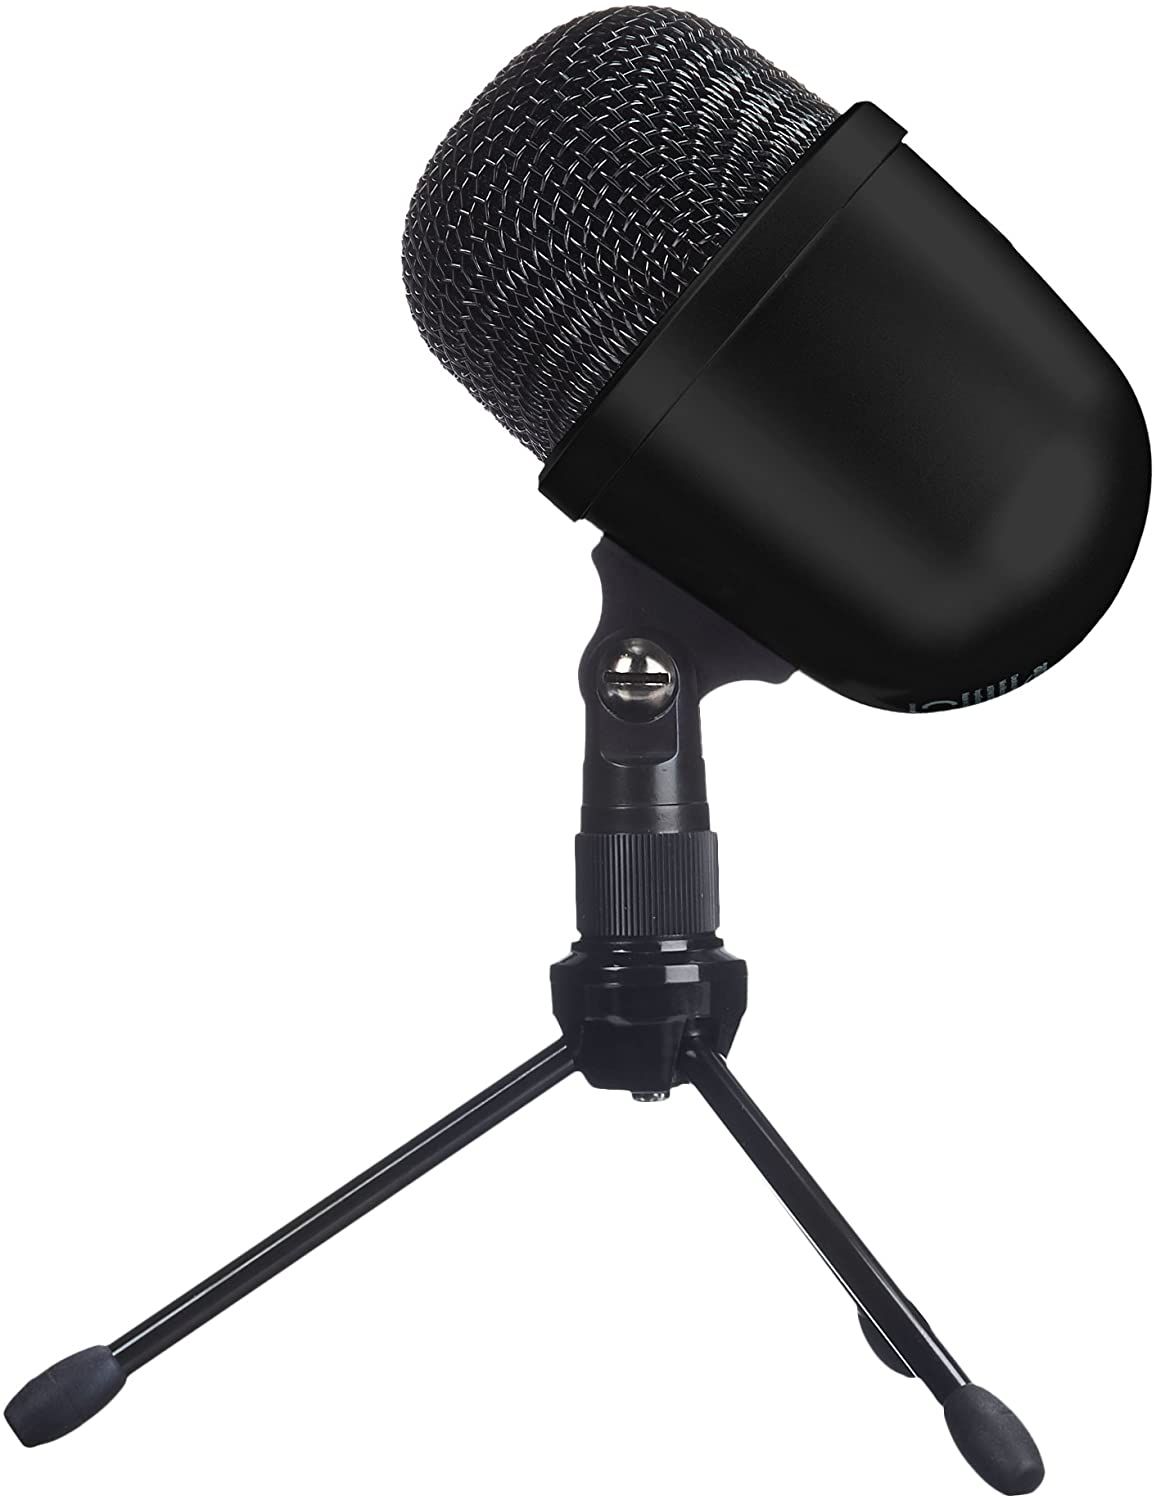 A display of Amazon Basics microphone with USB